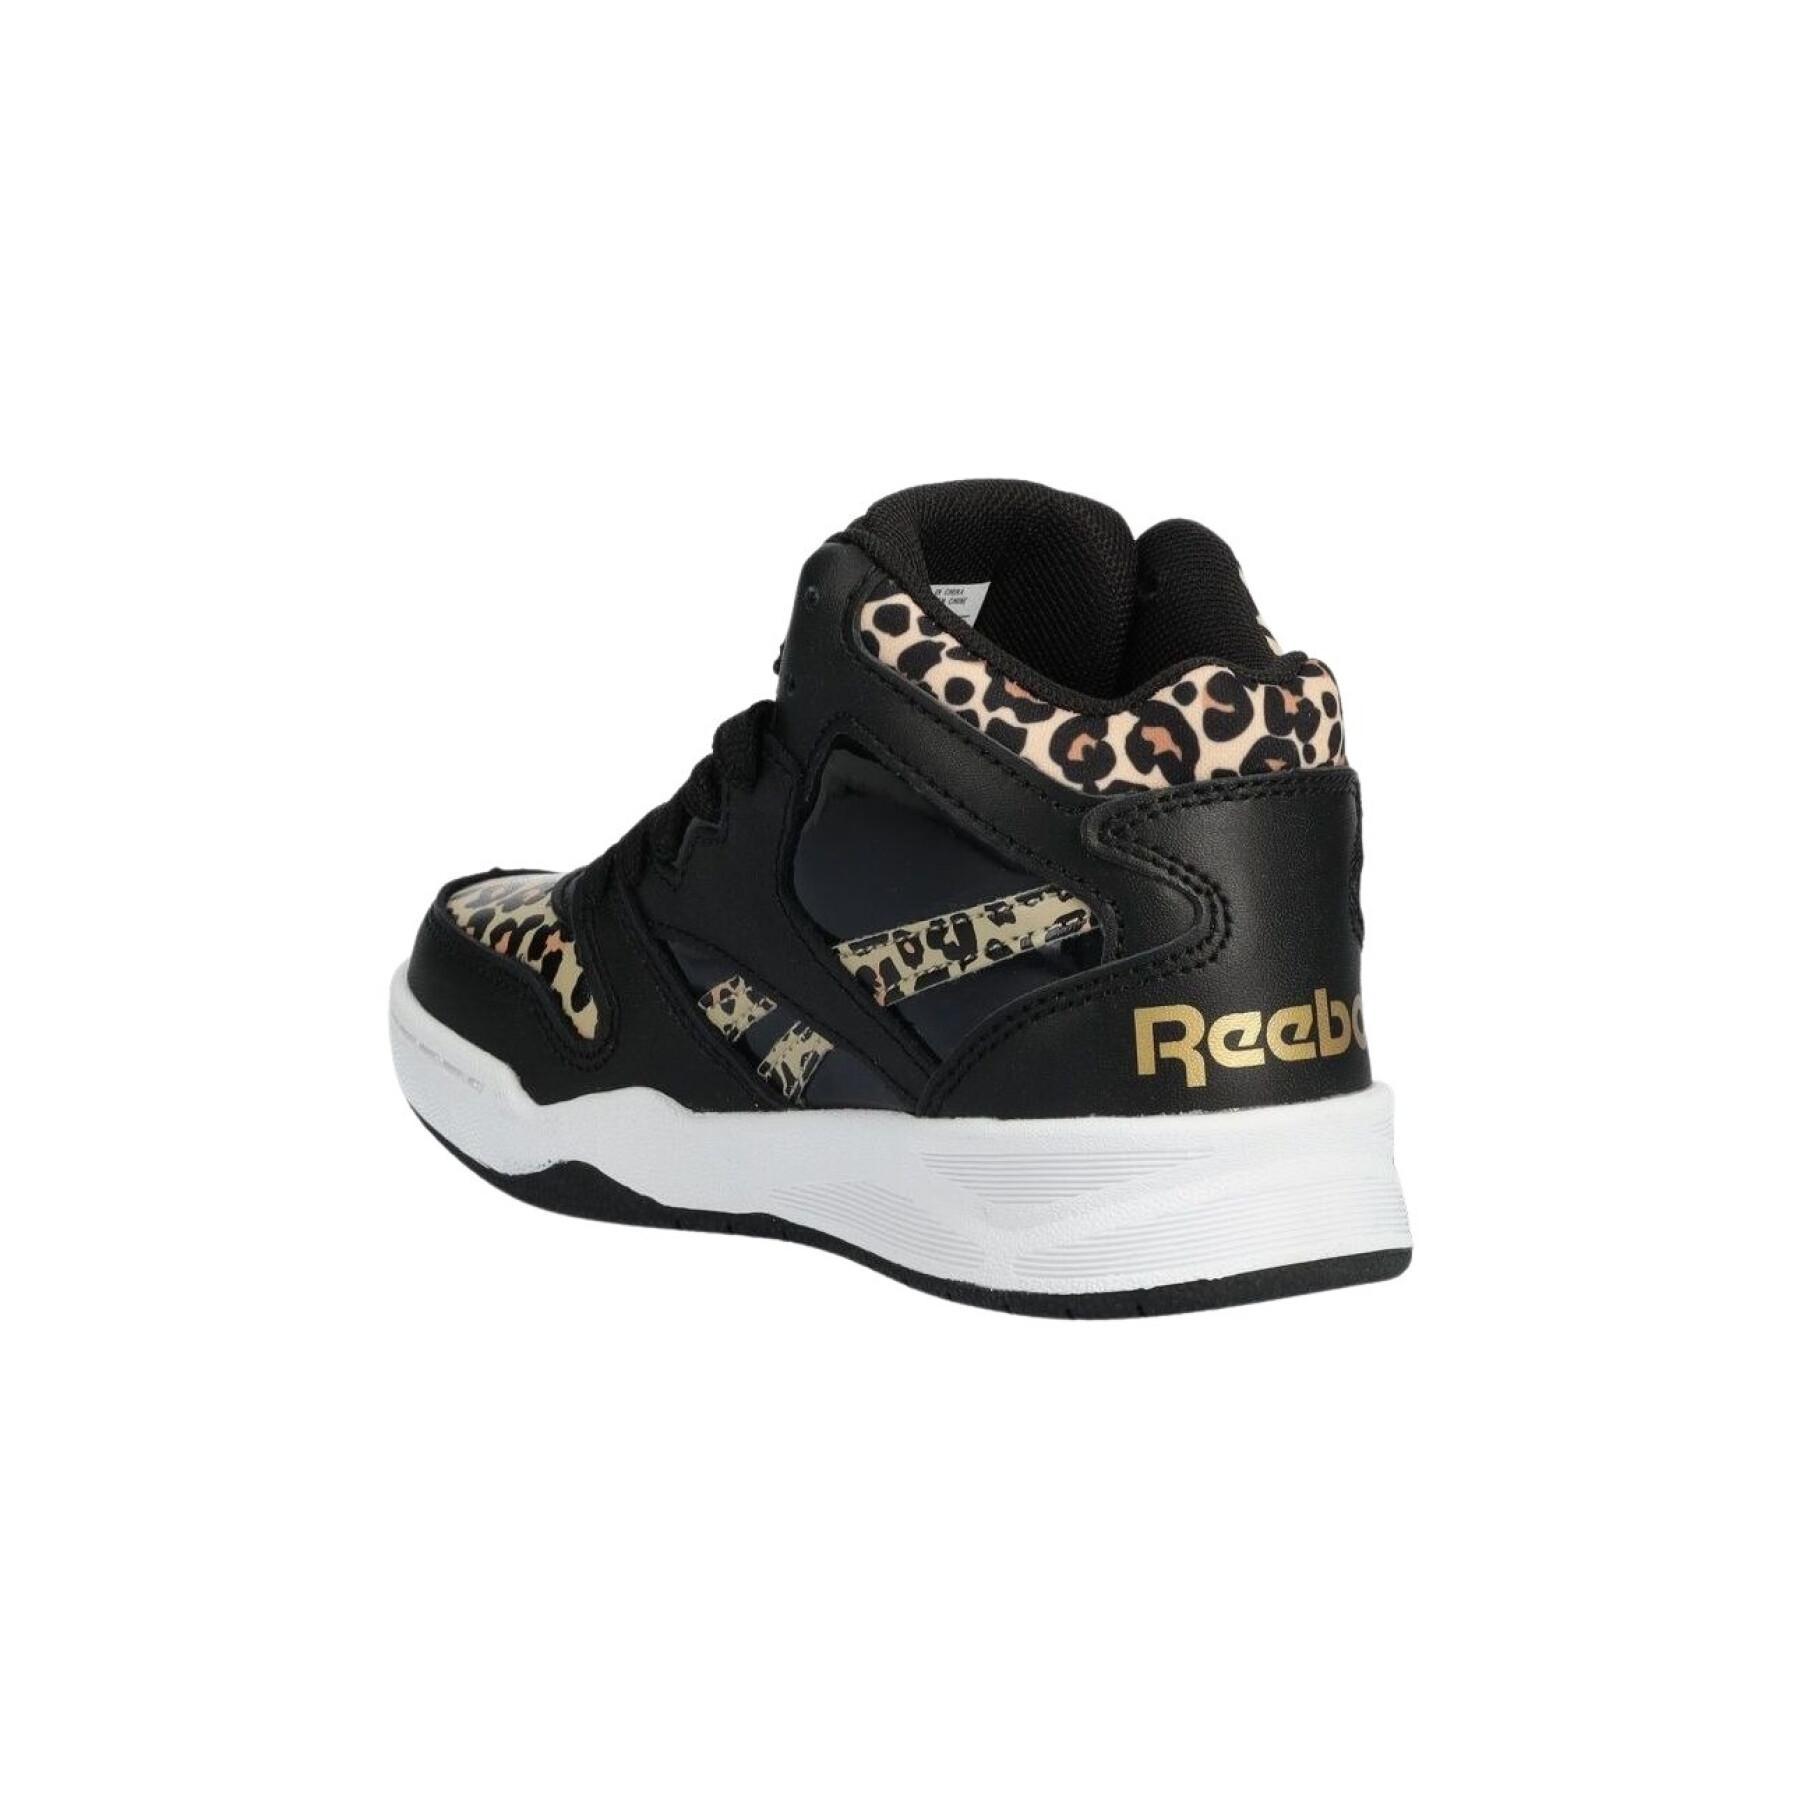 Girls basketball shoes Reebok BB45